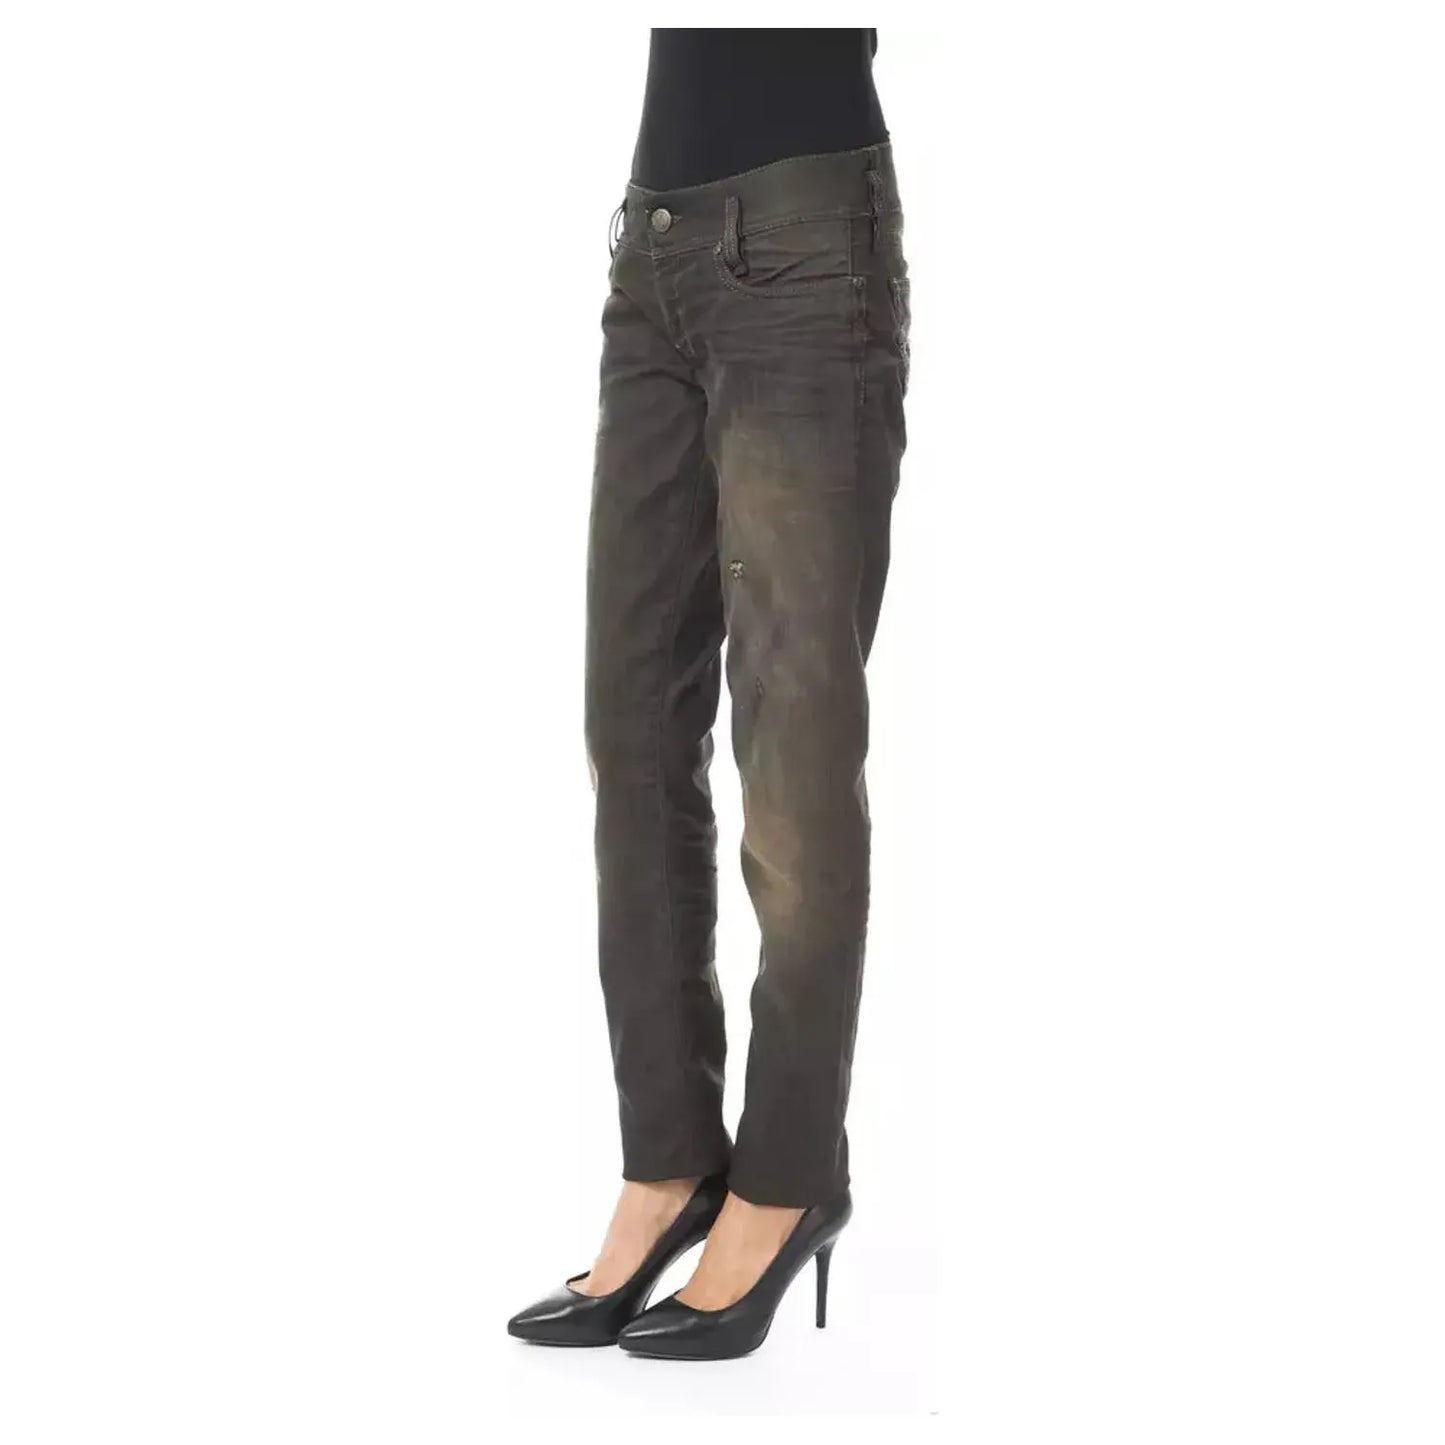 BYBLOS Sleek Black Washed Effect Jeans black-cotton-jeans-pant-17 stock_product_image_17638_372106006-17-3b326f0d-696.webp